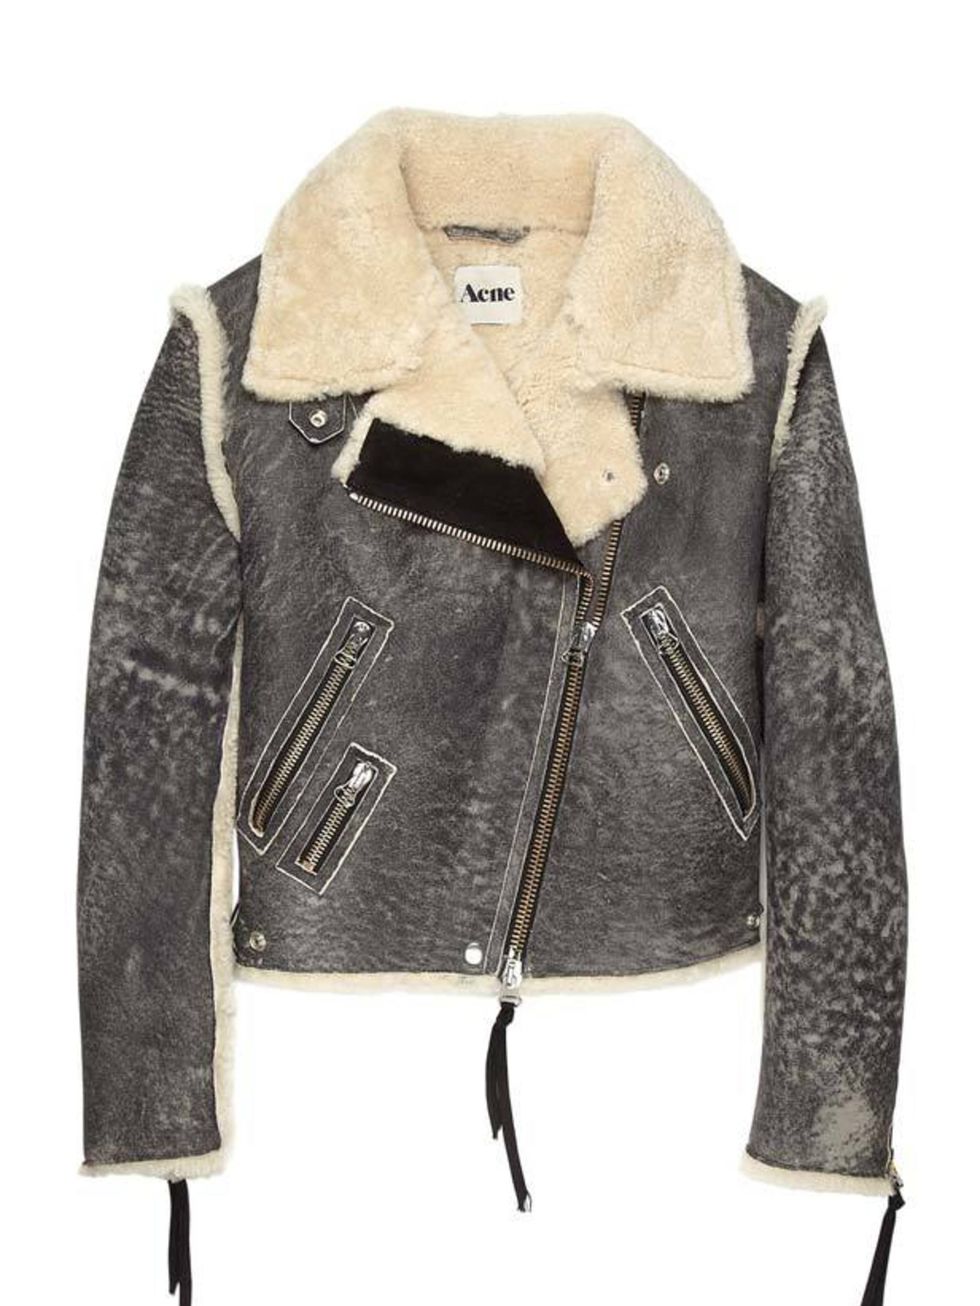 <p>Acne grey leather aviator jacket, £1,080, at <a href="http://www.my-wardrobe.com/acne/grey-leather-vintage-style-flight-jacket-450195">My-Wardrobe</a></p>